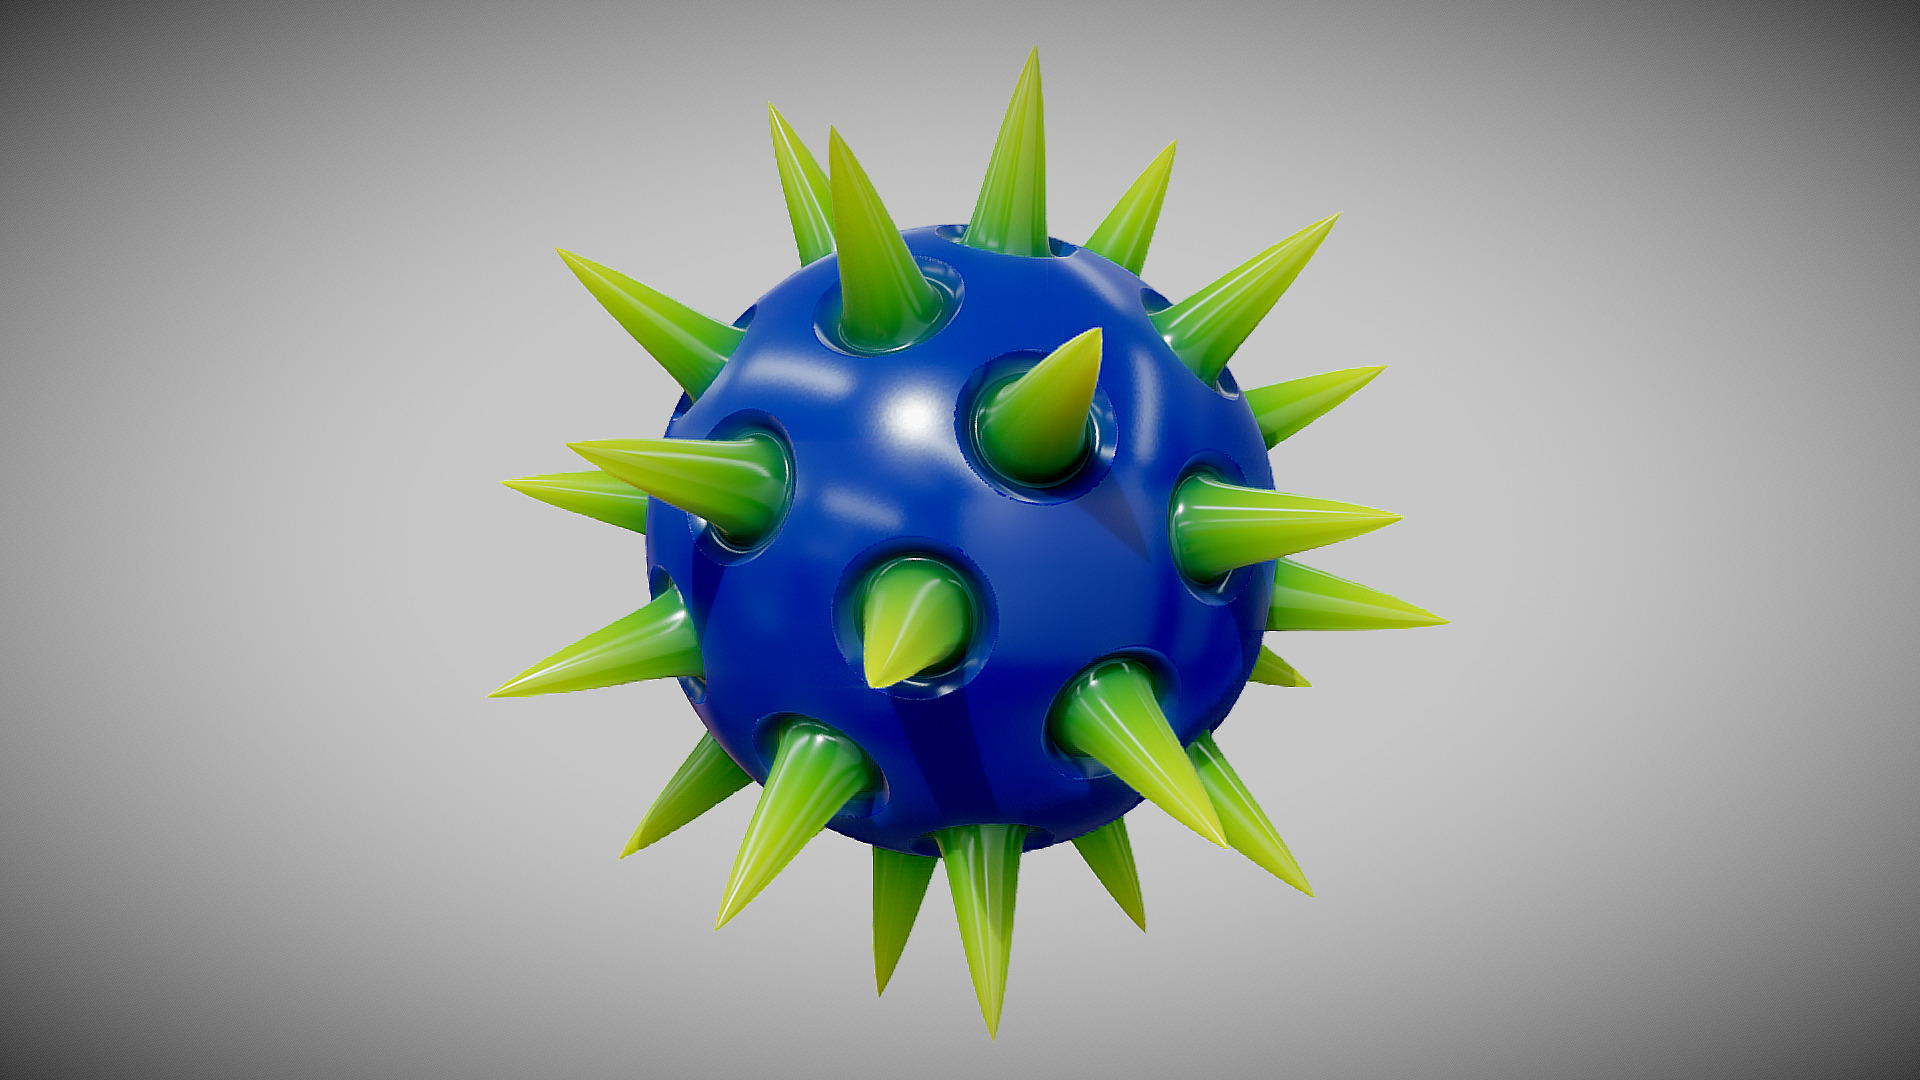 3D model Fibonacci Ball 2 - This is a 3D model of the Fibonacci Ball 2. The 3D model is about a blue and green flower.